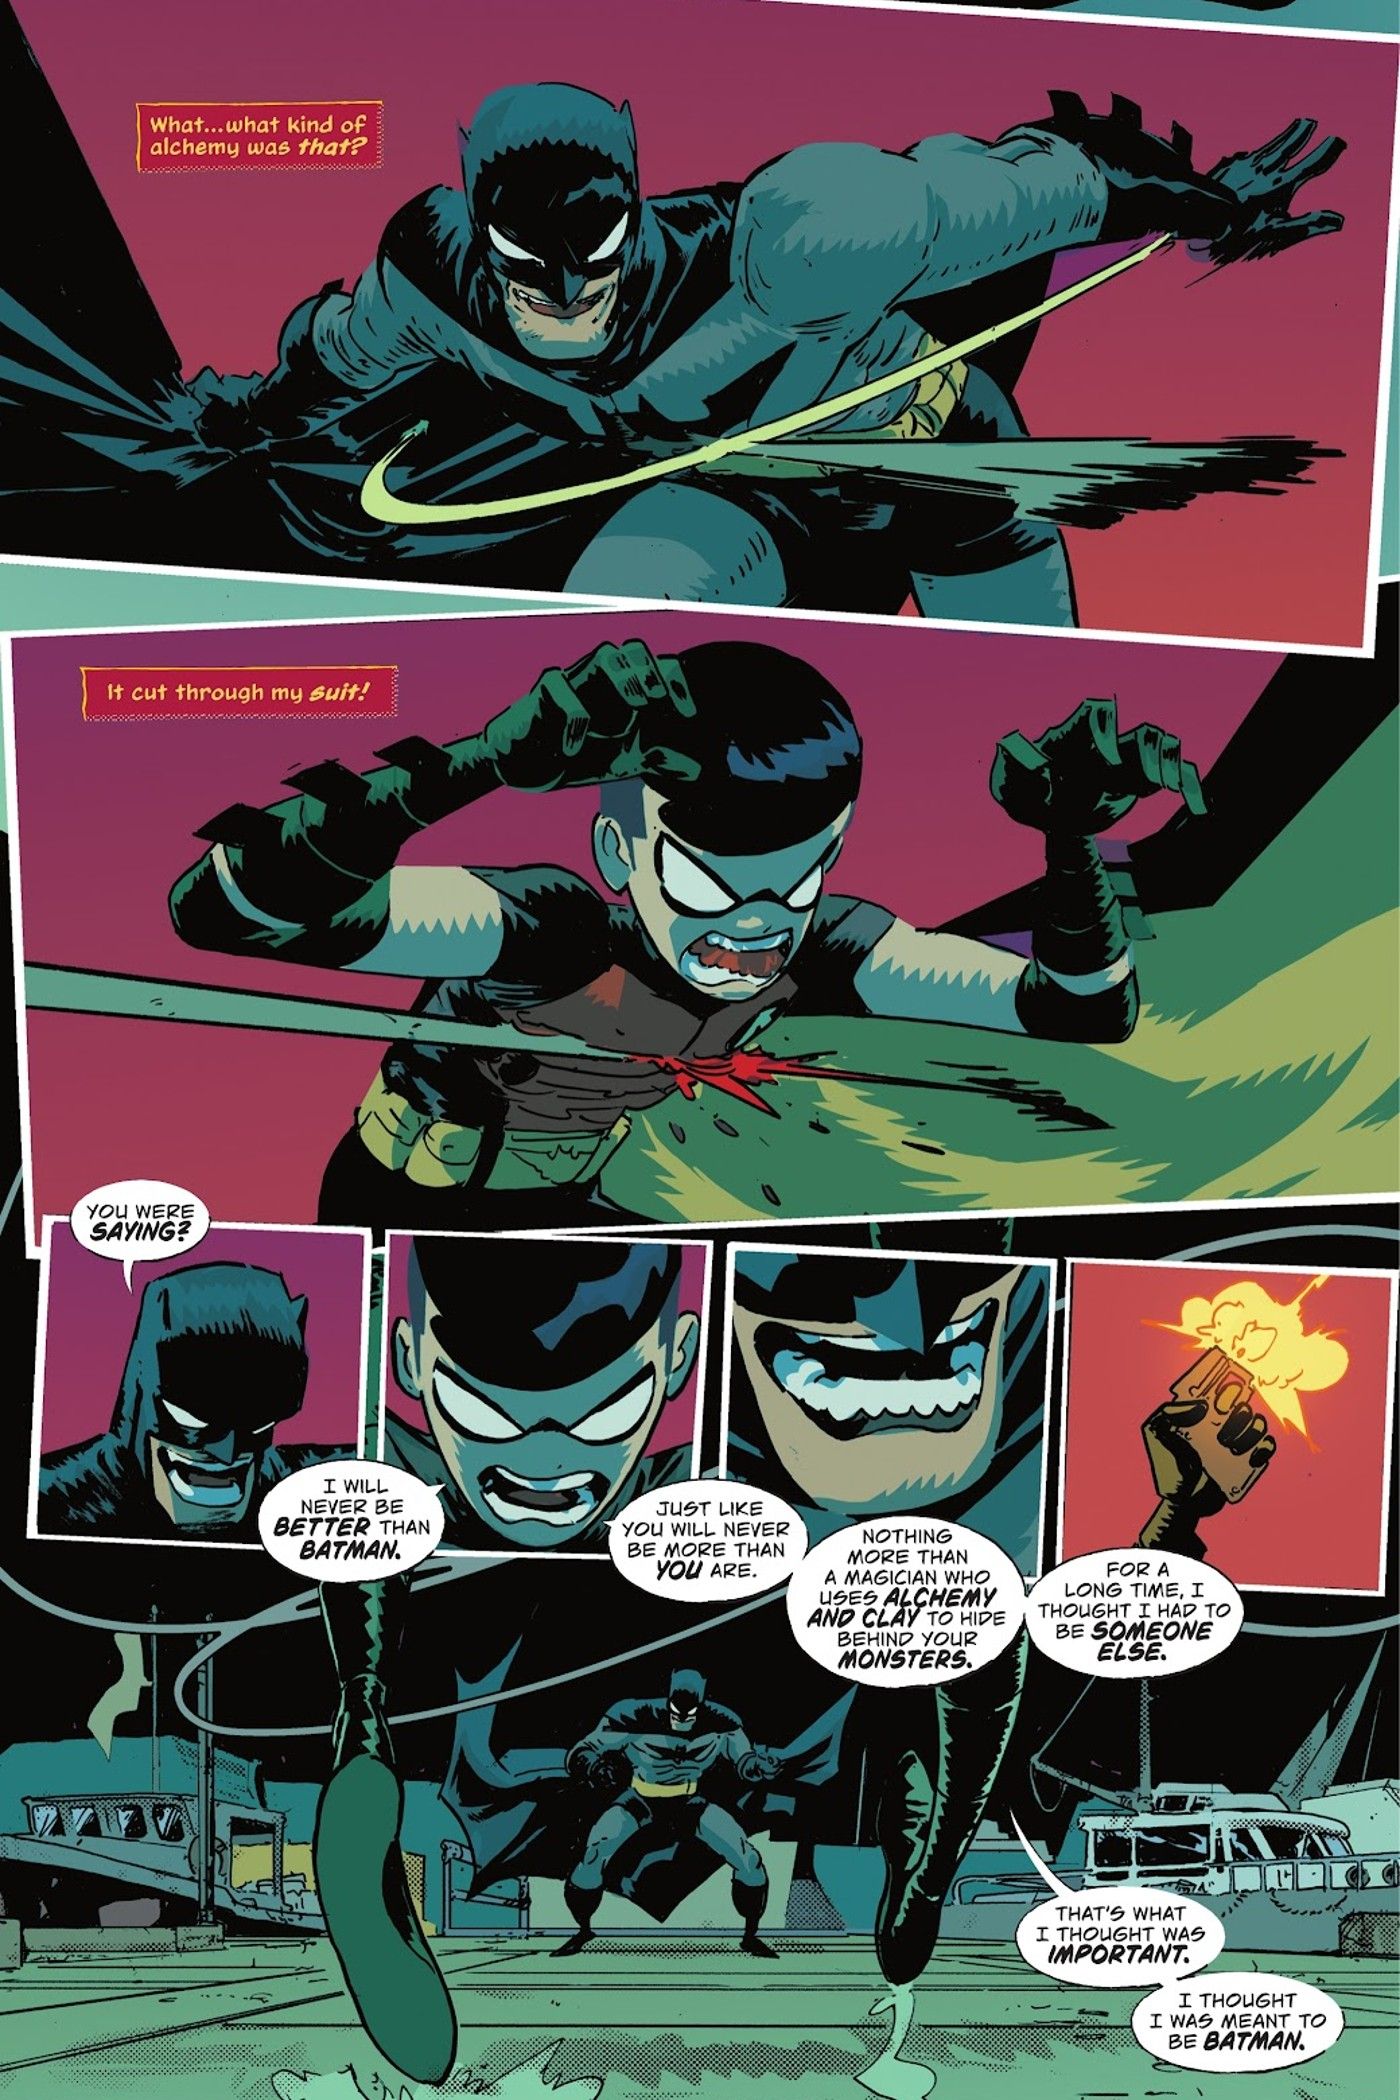 Moriarty as Batman fights Tim Drake Robin